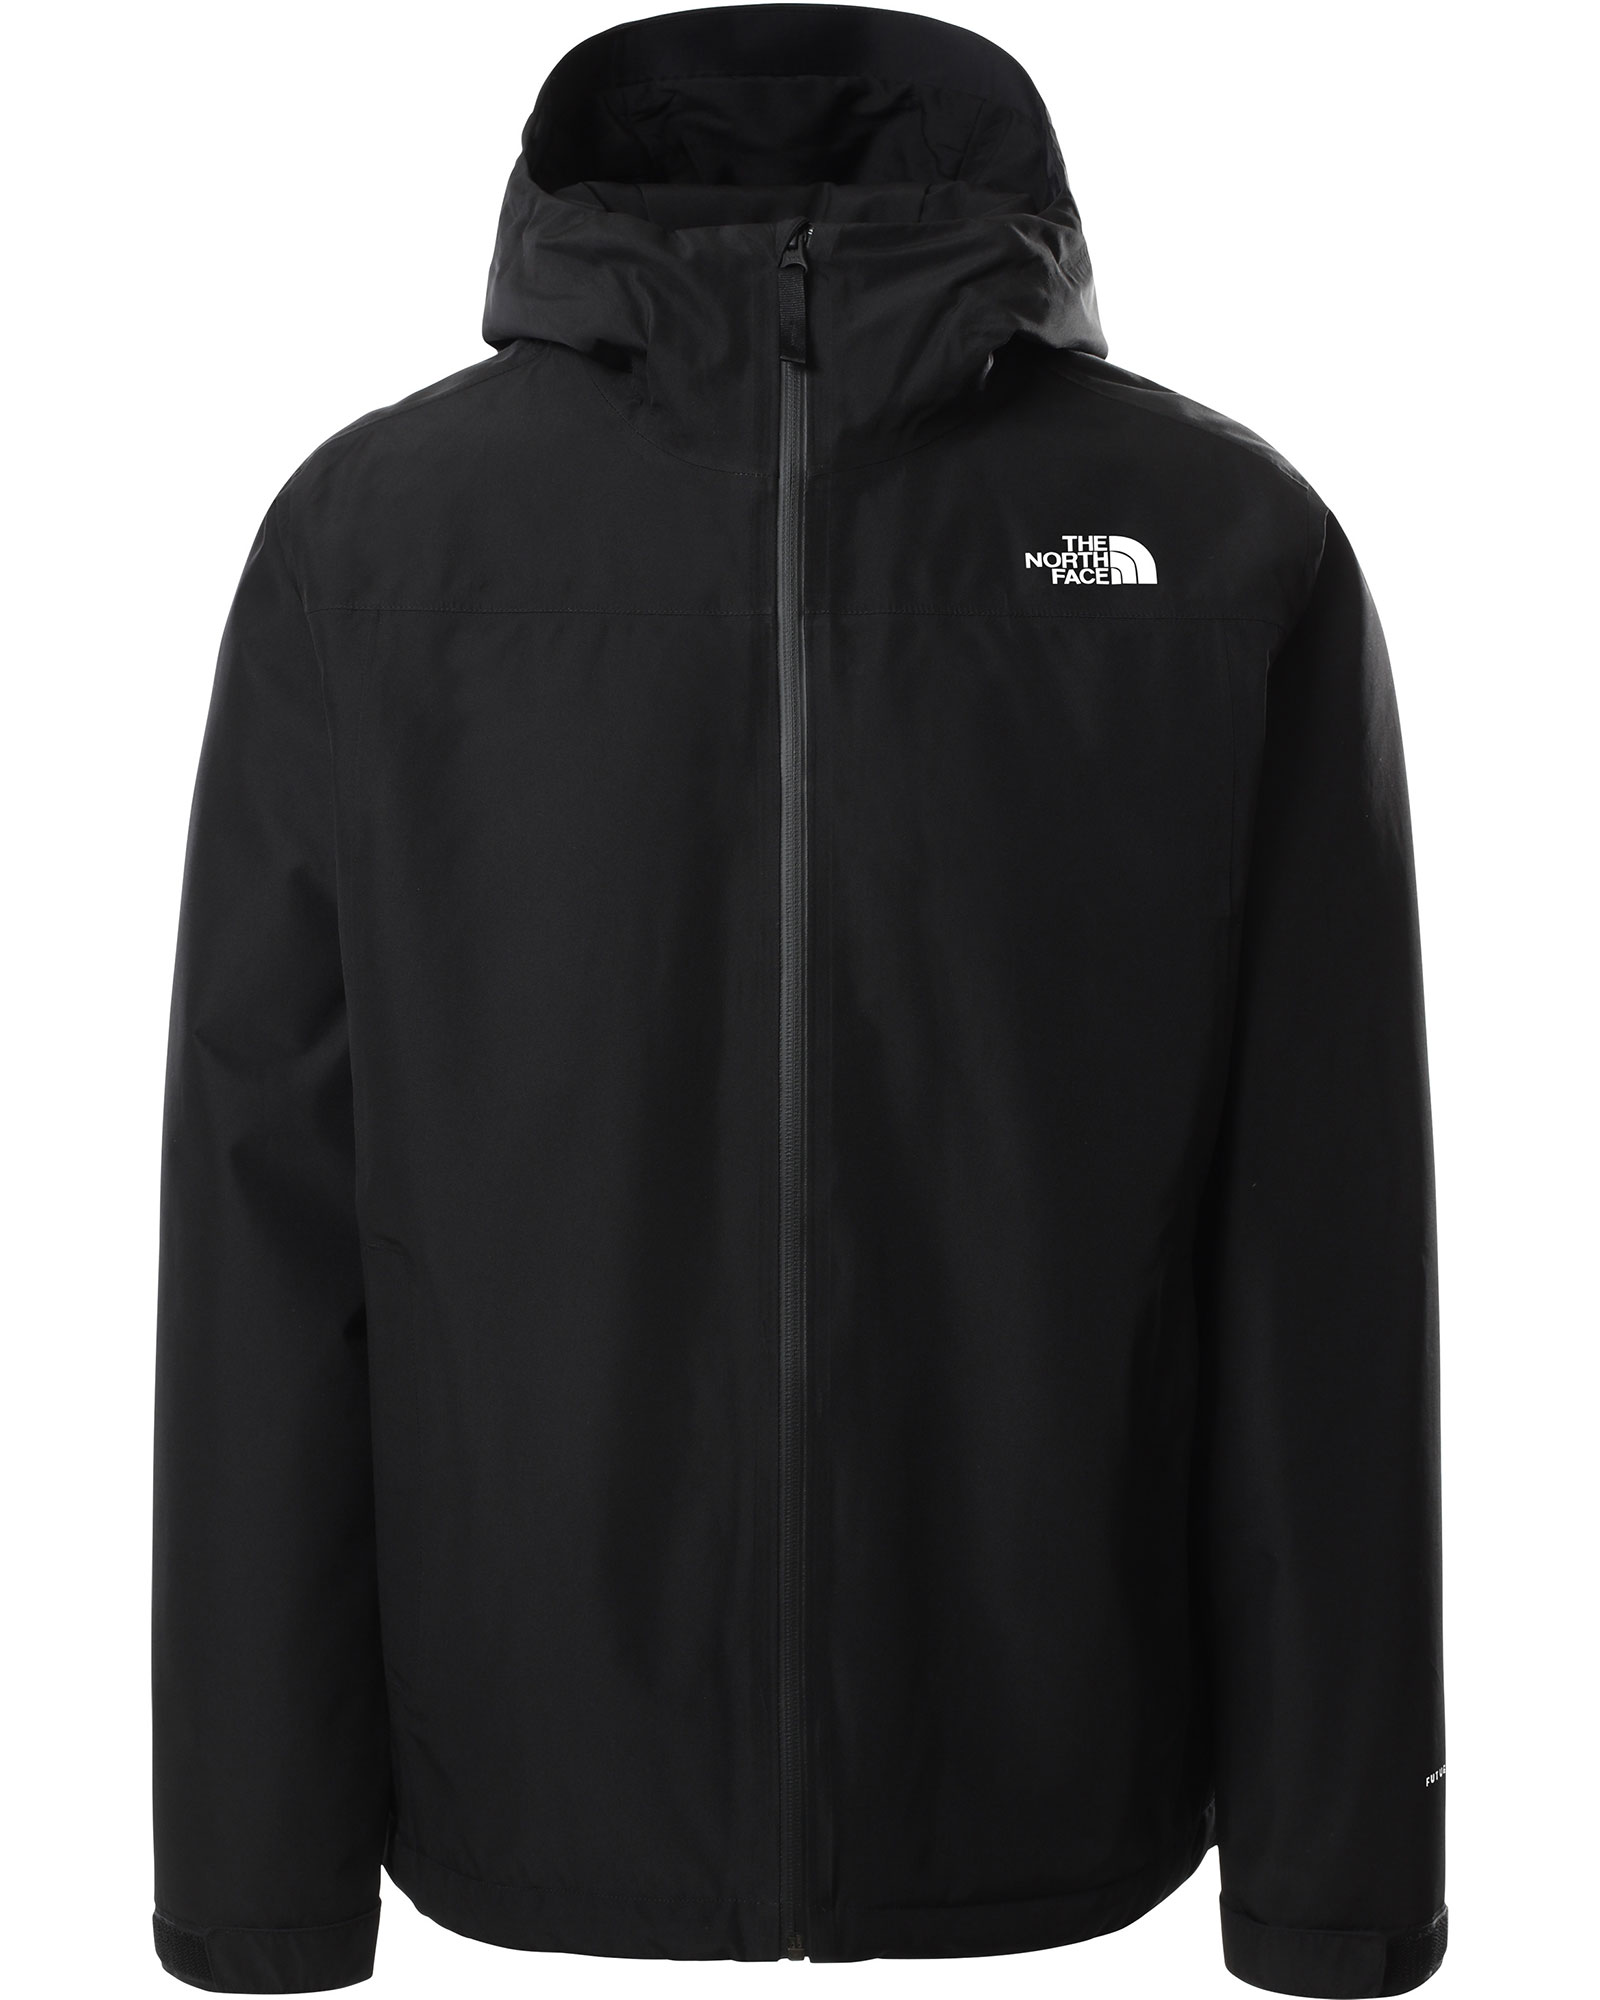 The North Face Dryzzle FUTURELIGHT Men’s Insulated Jacket - TNF Black XL